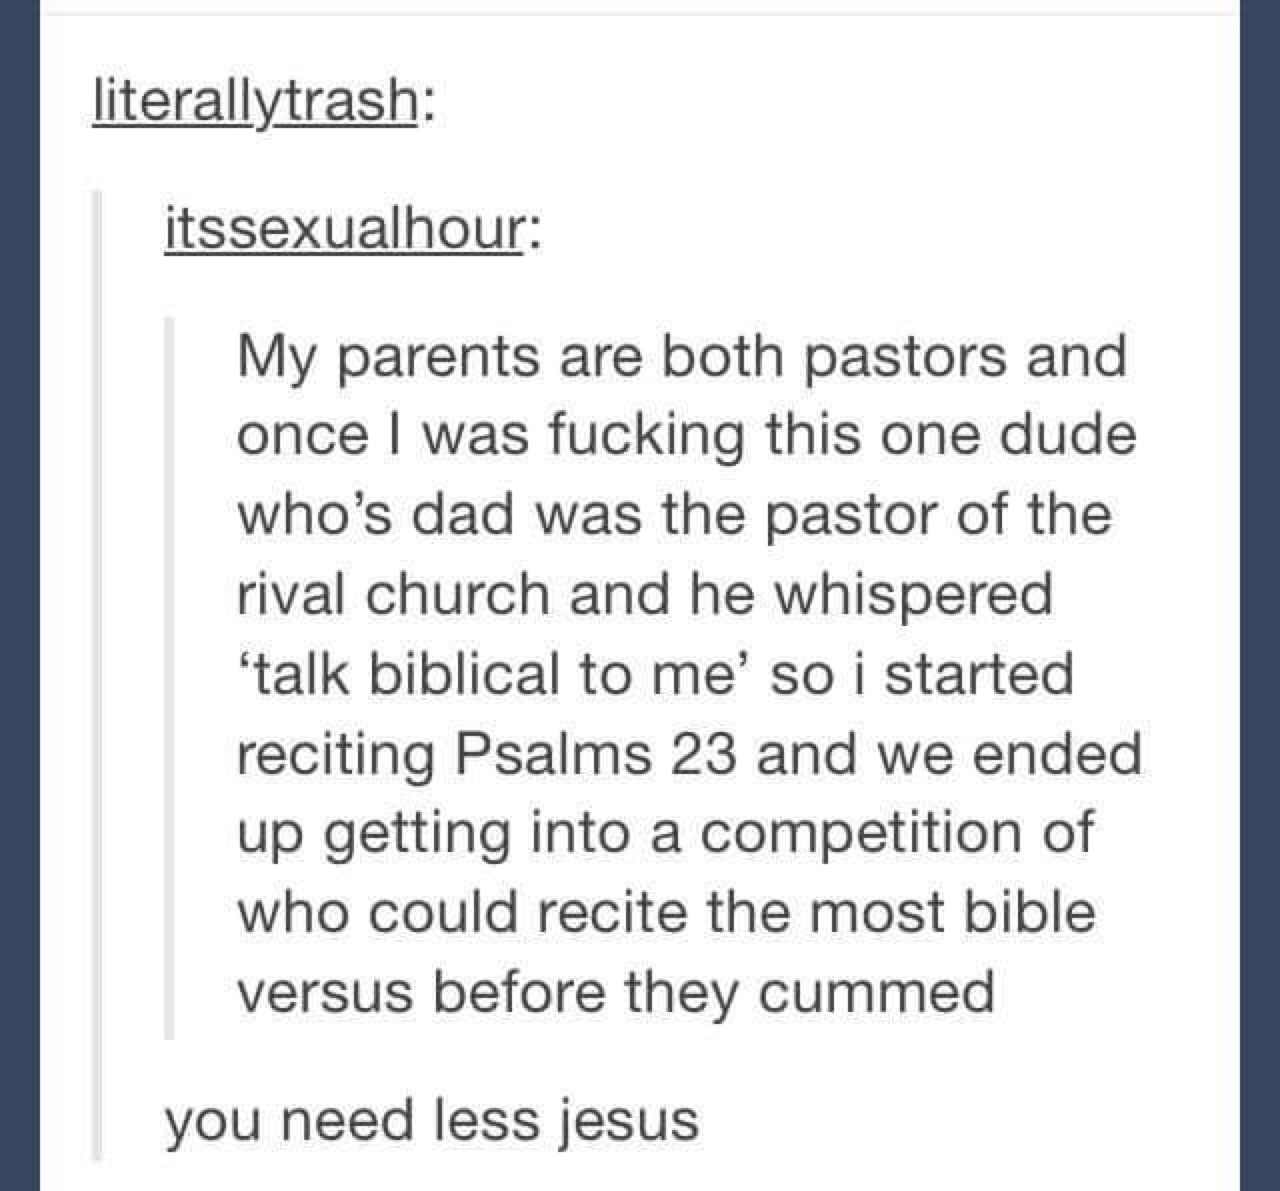 You need Jesus - meme